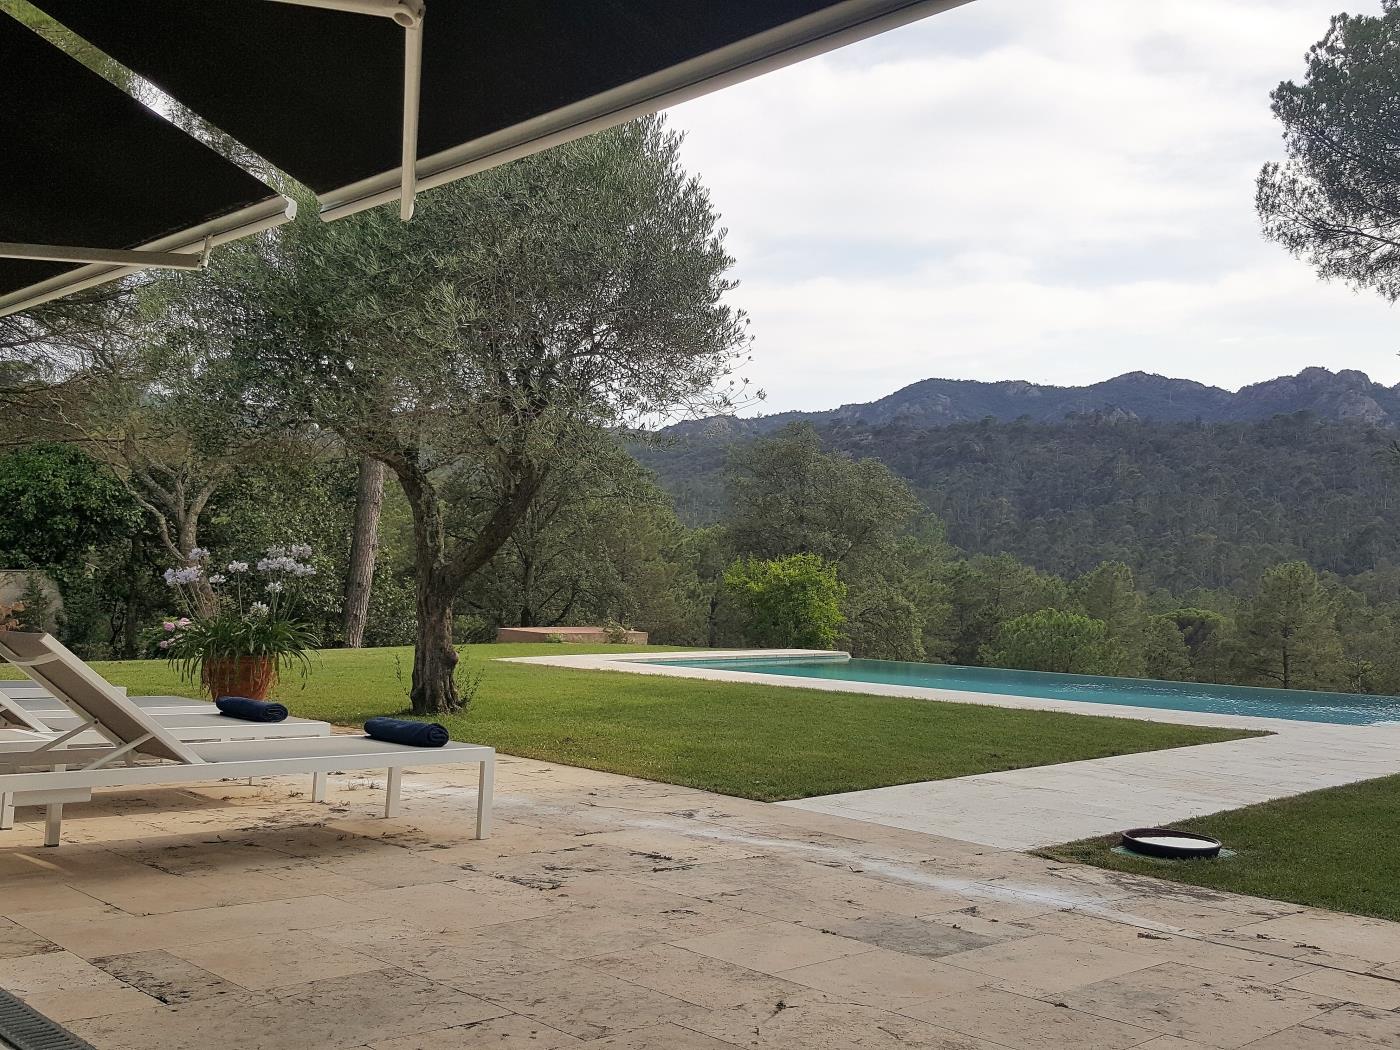 Casa Maravilla huis aan de Golf Costa Brava met privé infinity pool. .en Santa Cristina d'Aro